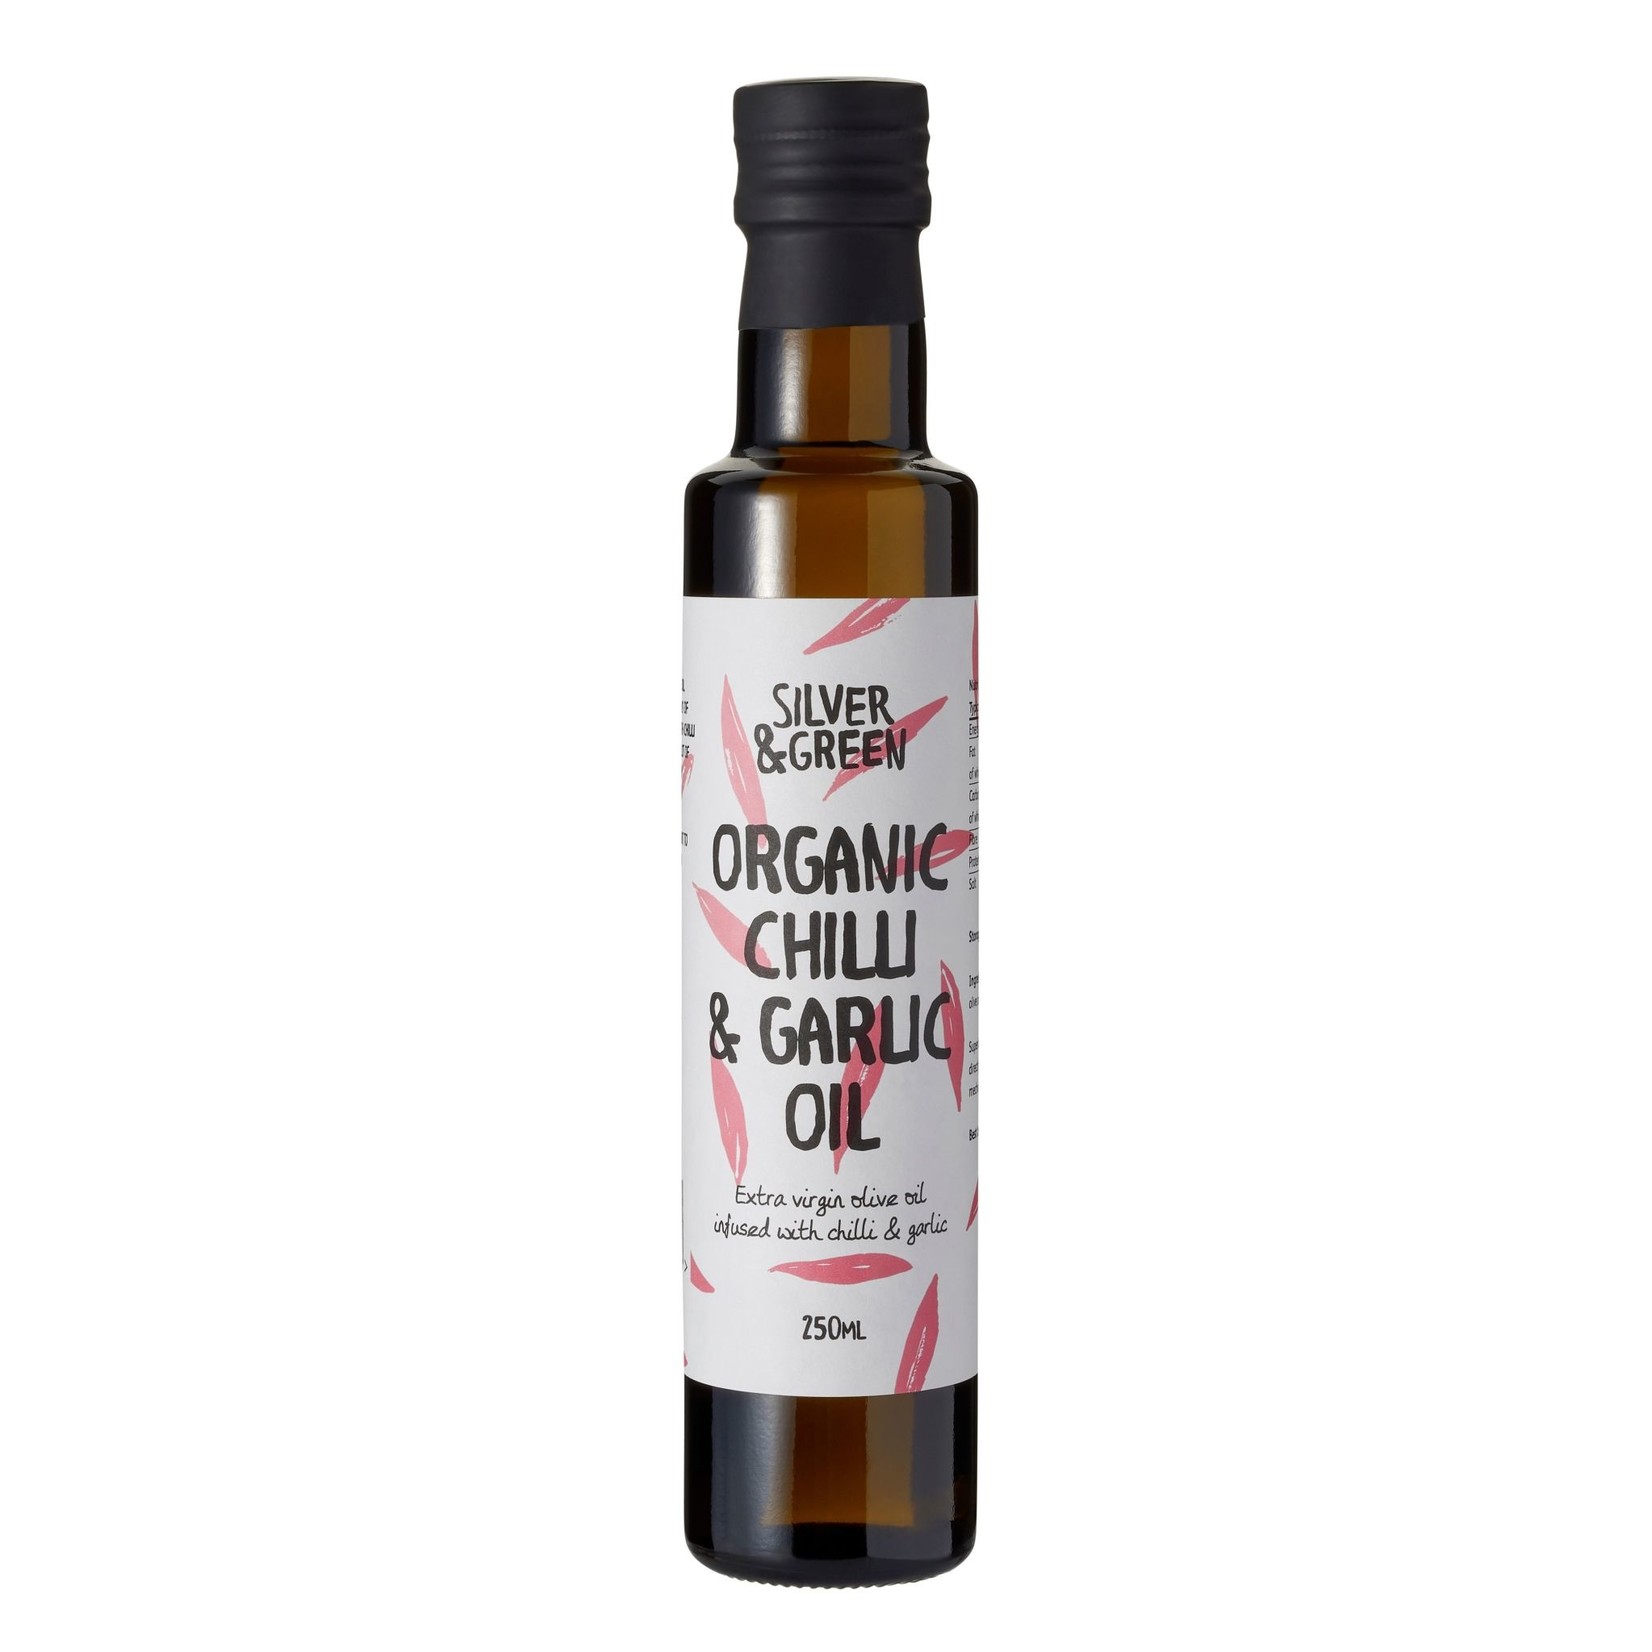 SILVER & GREEN Organic Chilli & Garlic Oil 250ml